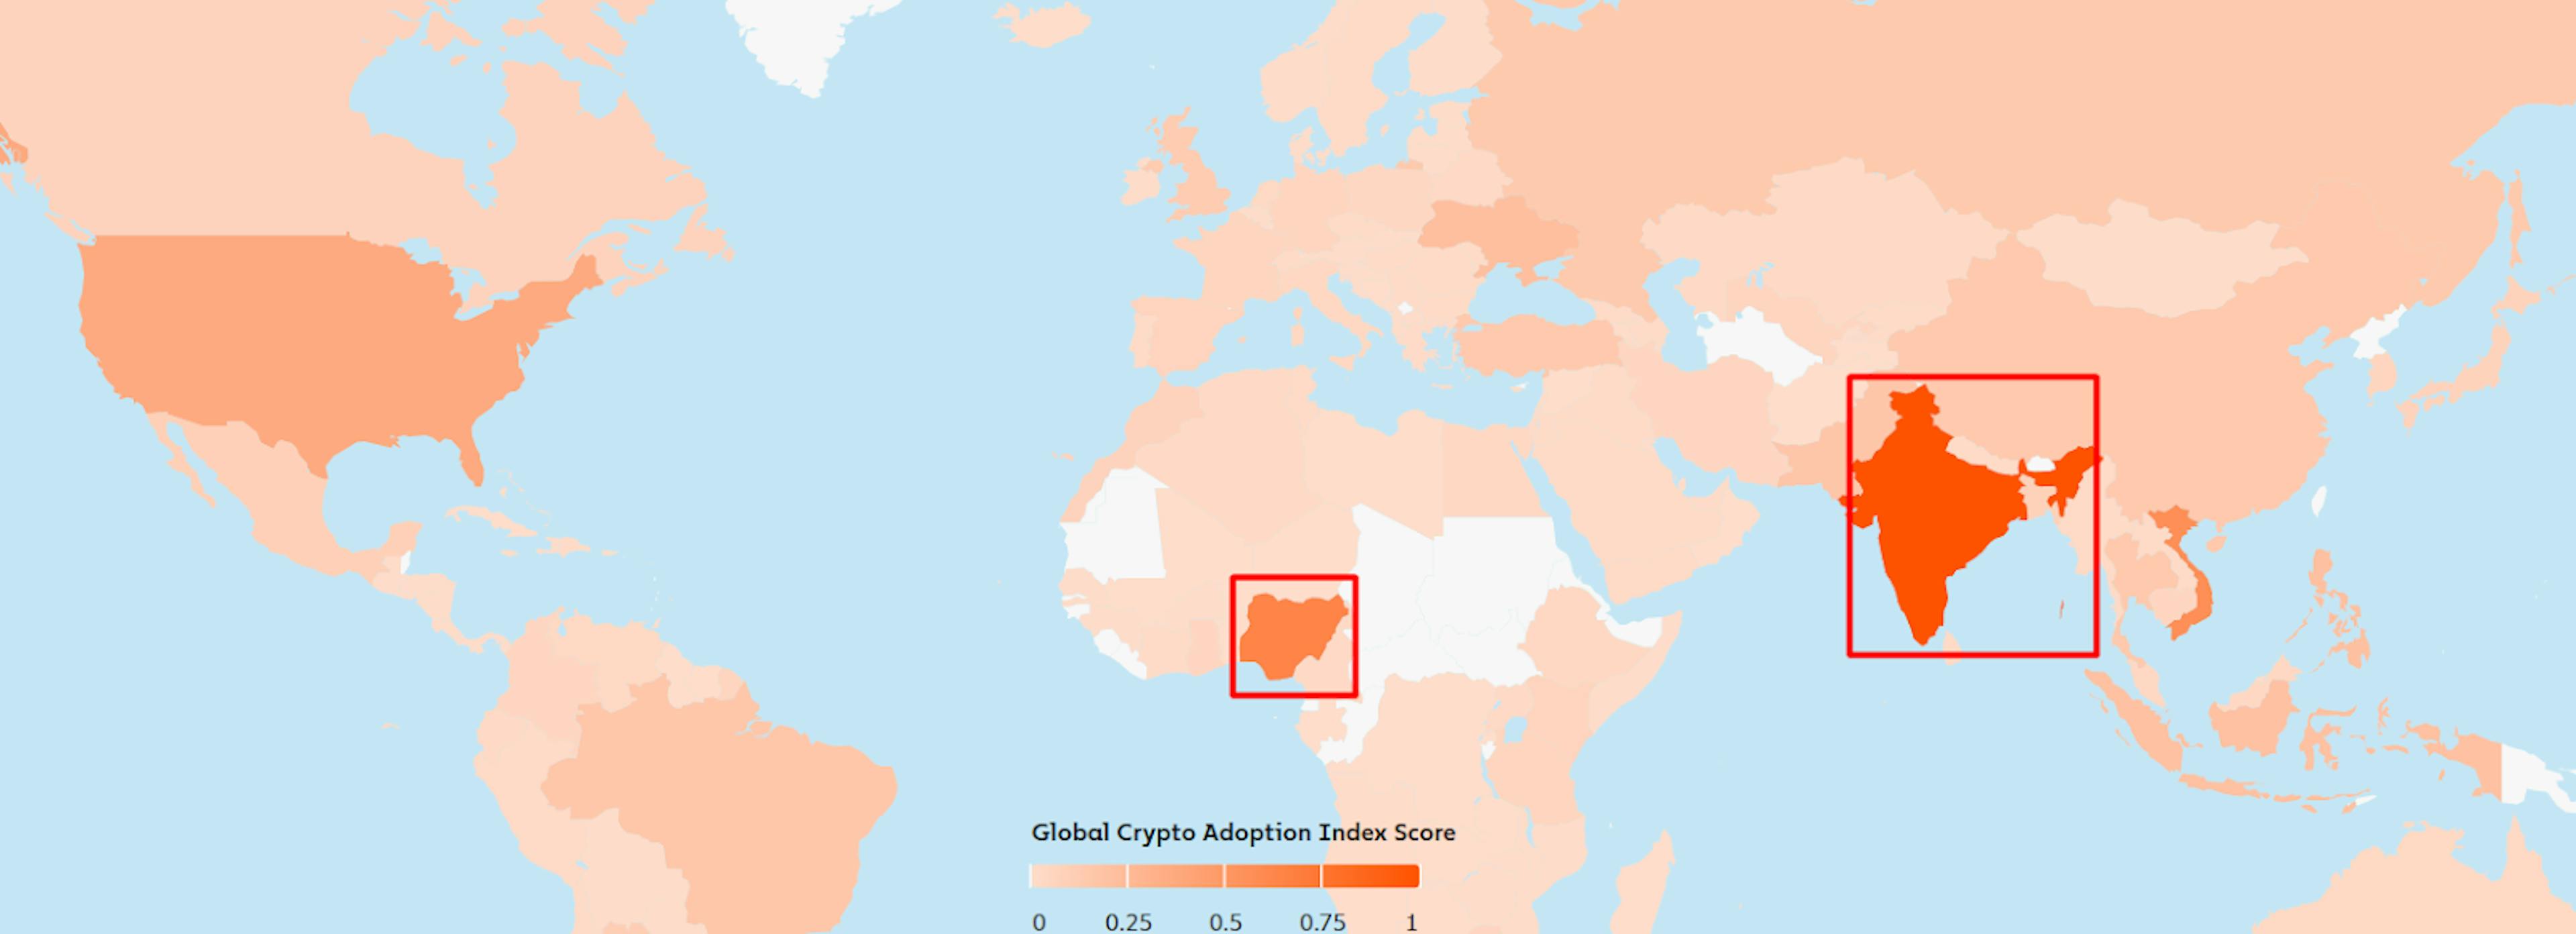 Nguồn: https://www.chainalysis.com/blog/2023-global-crypto-adoption-index/#top20